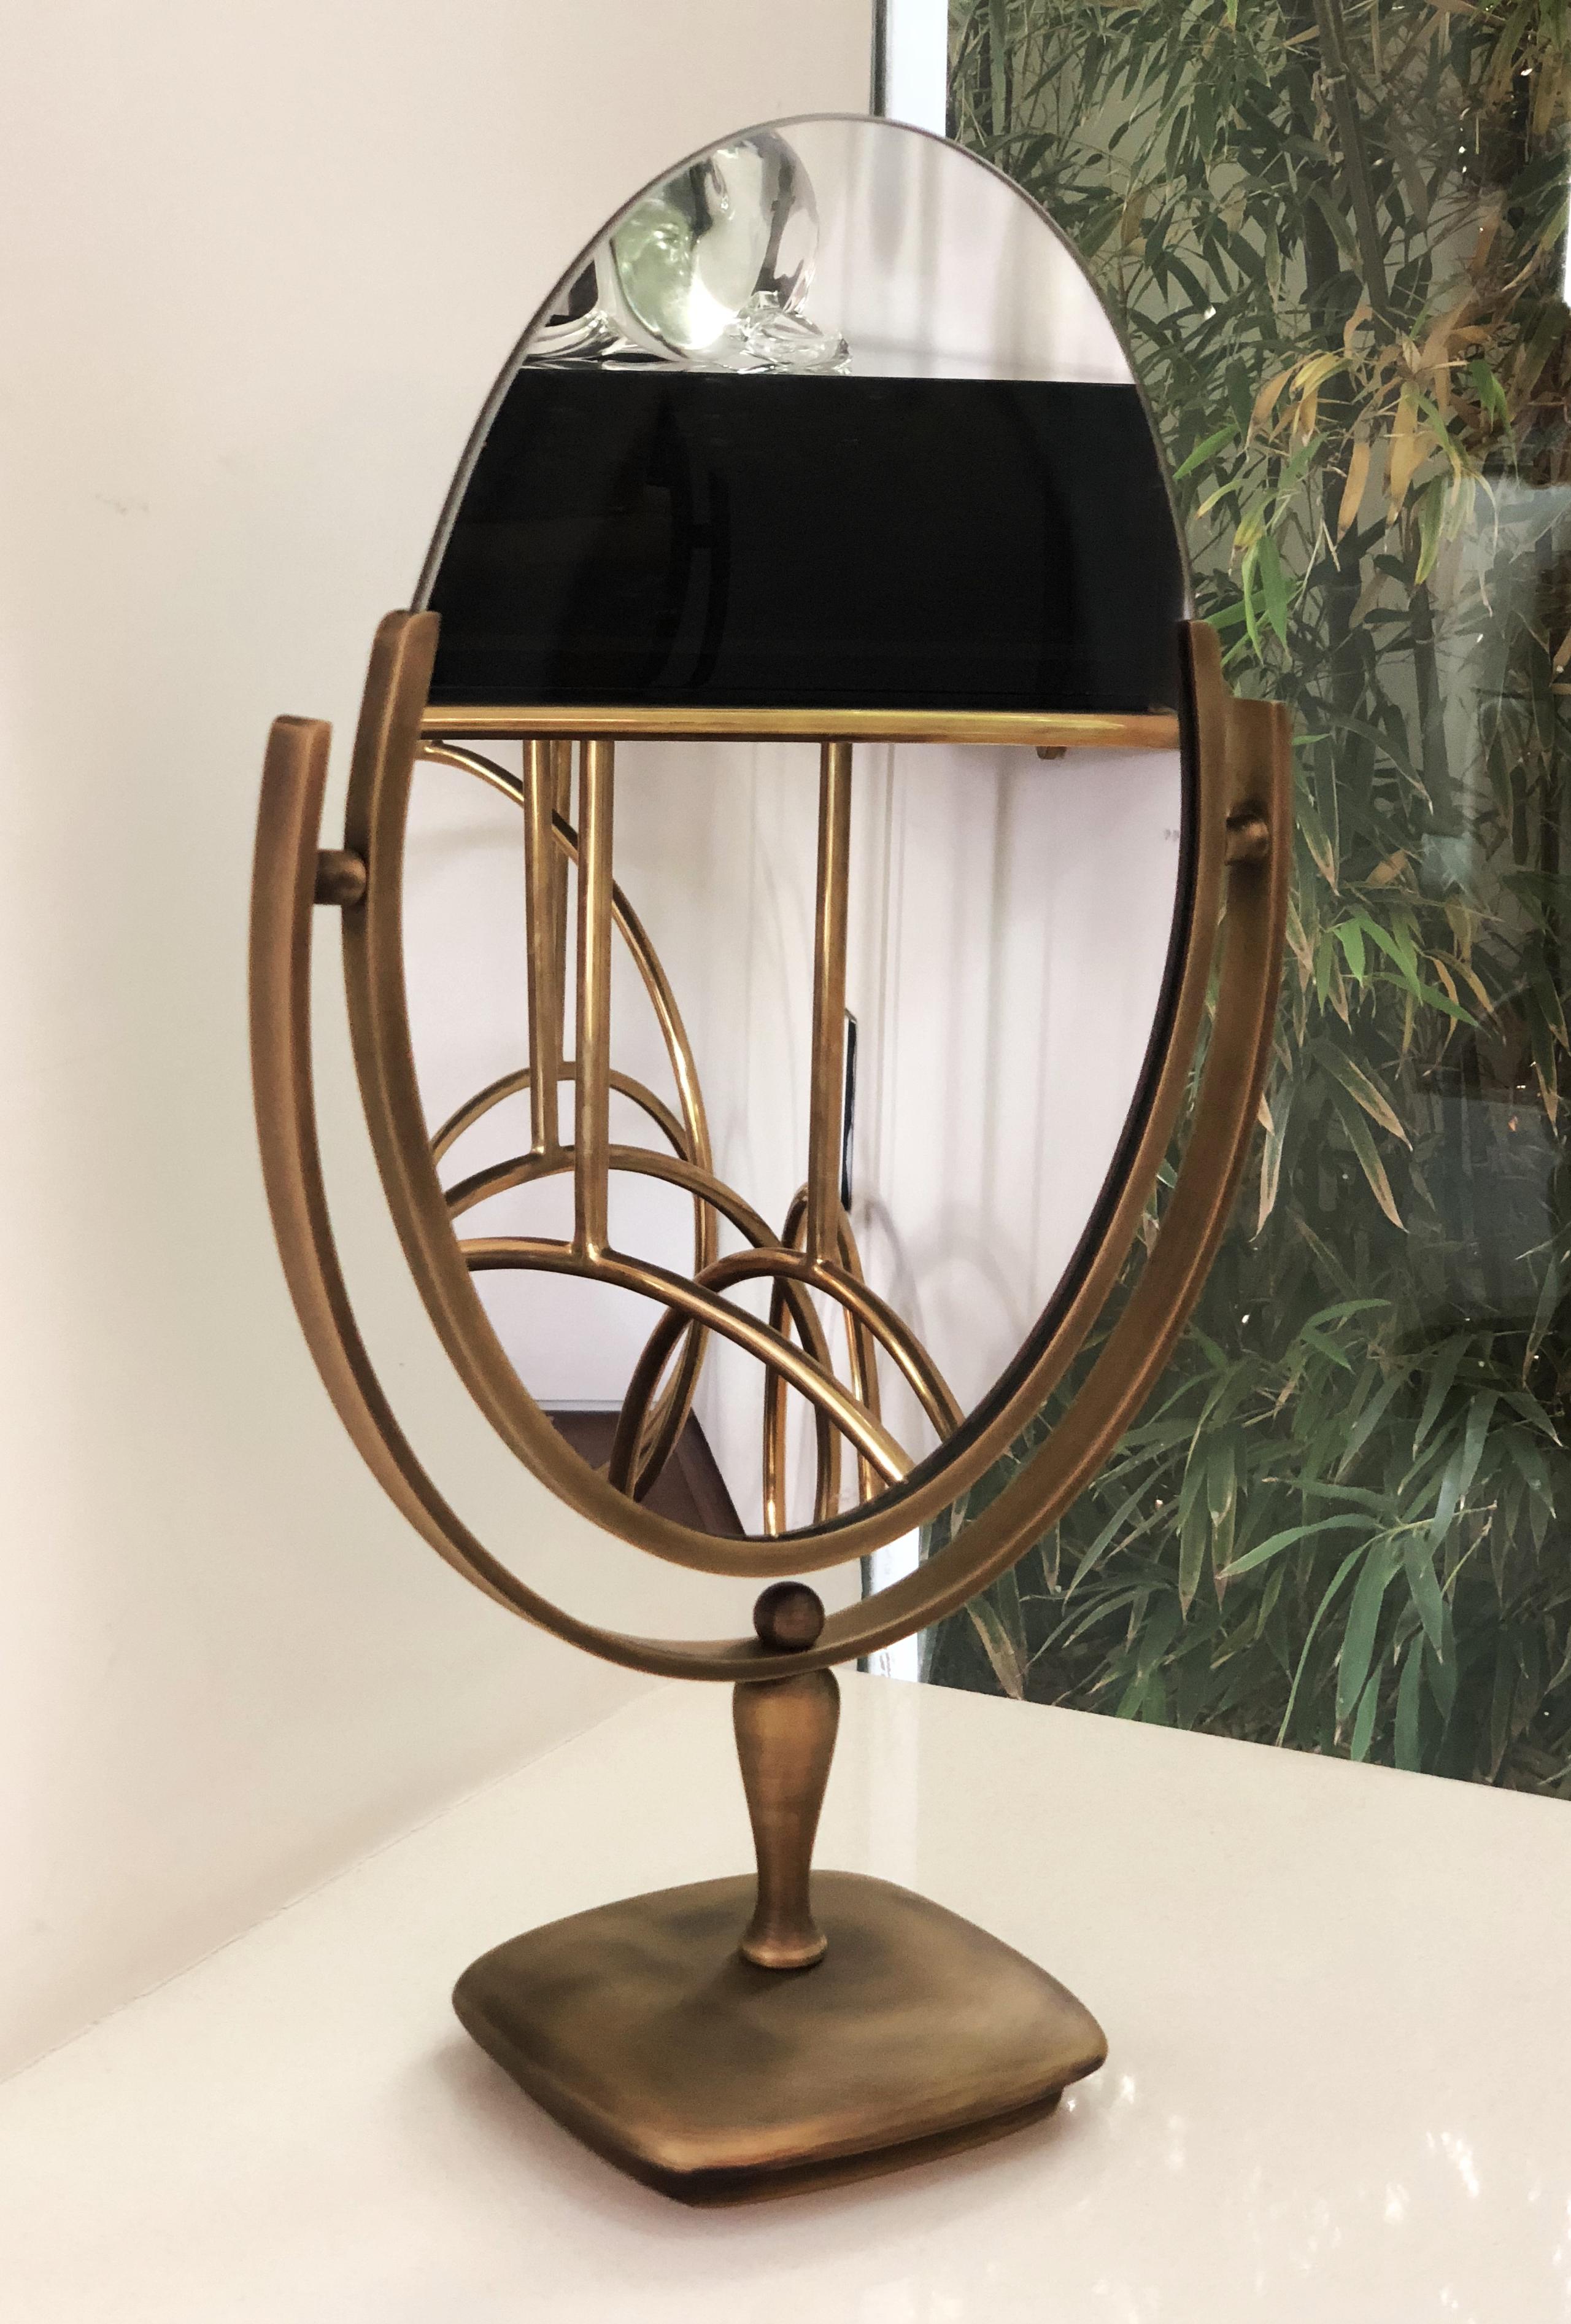 vintage brass vanity mirror